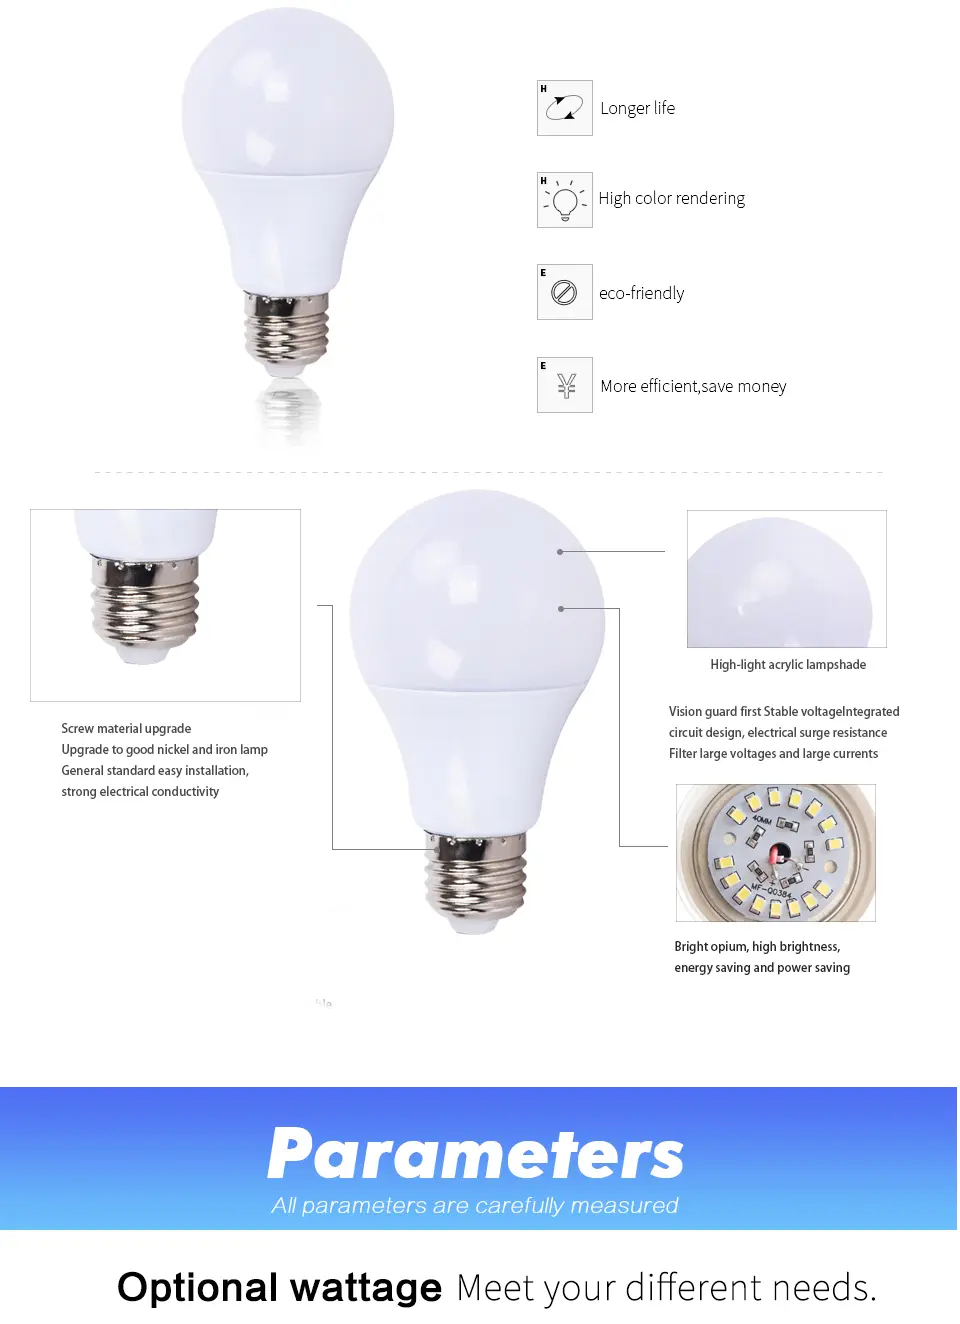 LED Light Bulb DC 12V, E27 Base, 3W, Warm White, Low Voltages Bulbs for Outdoor String Lights. Product Description: Item Name: LED Bulb DC12V Power: 3W, Voltage: DC12V, Socket Base: E27, Led Chip Model: SMD2835, Colour Temperature: Warm White 2700-3200K 